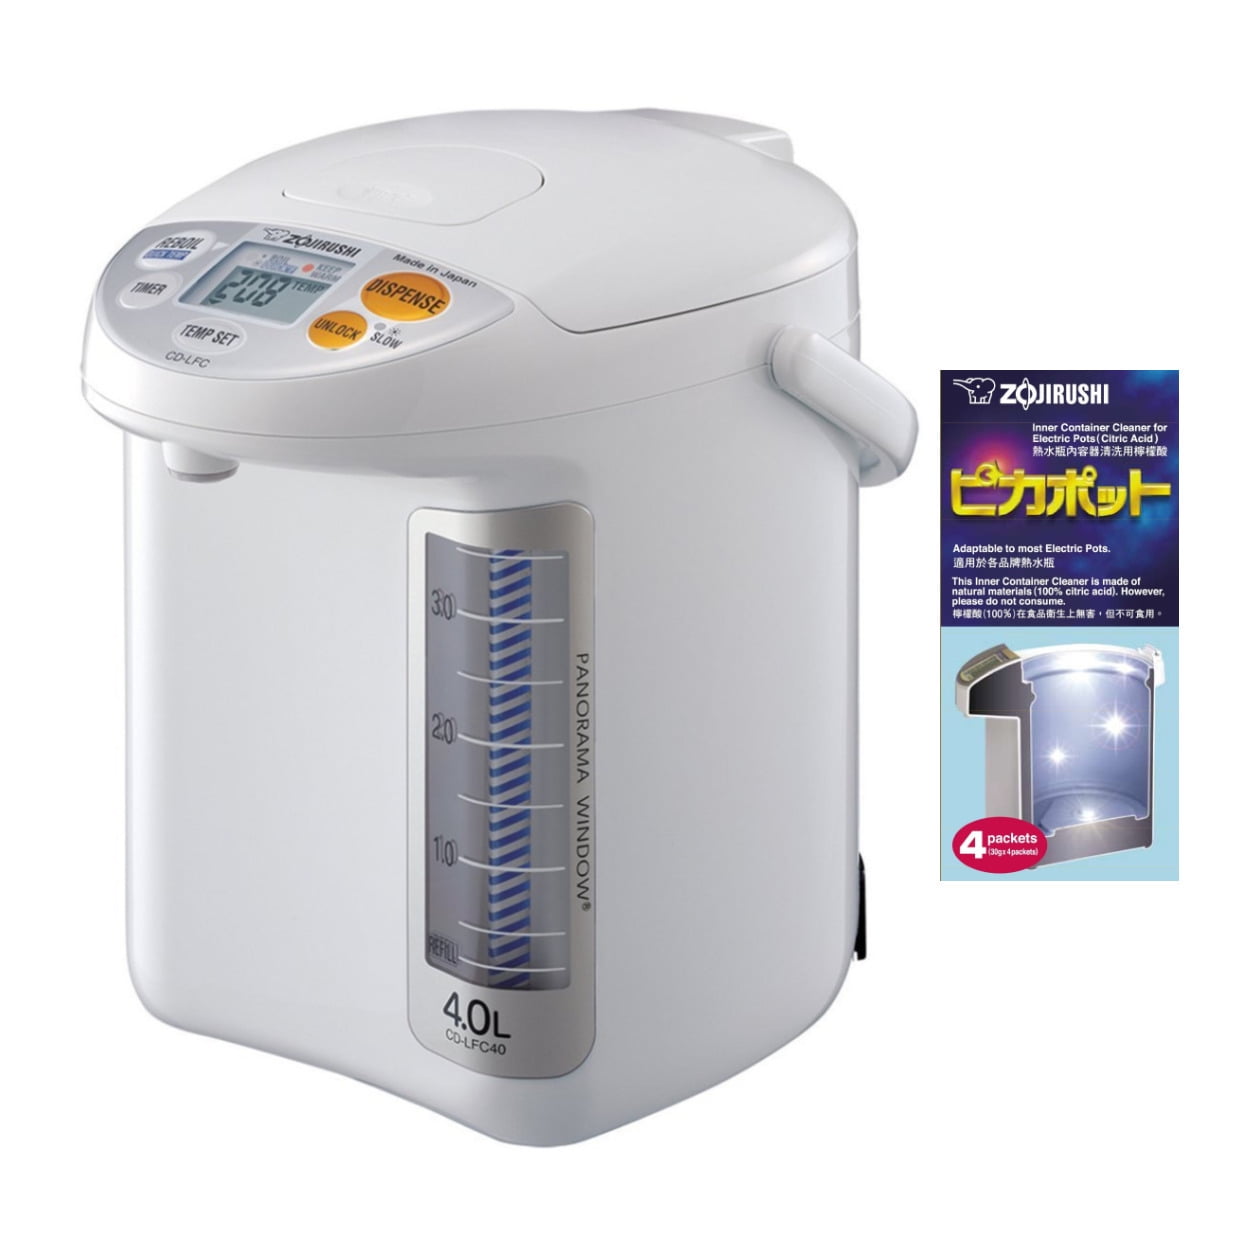 How To Descale Zojirushi Hot Water Dispenser